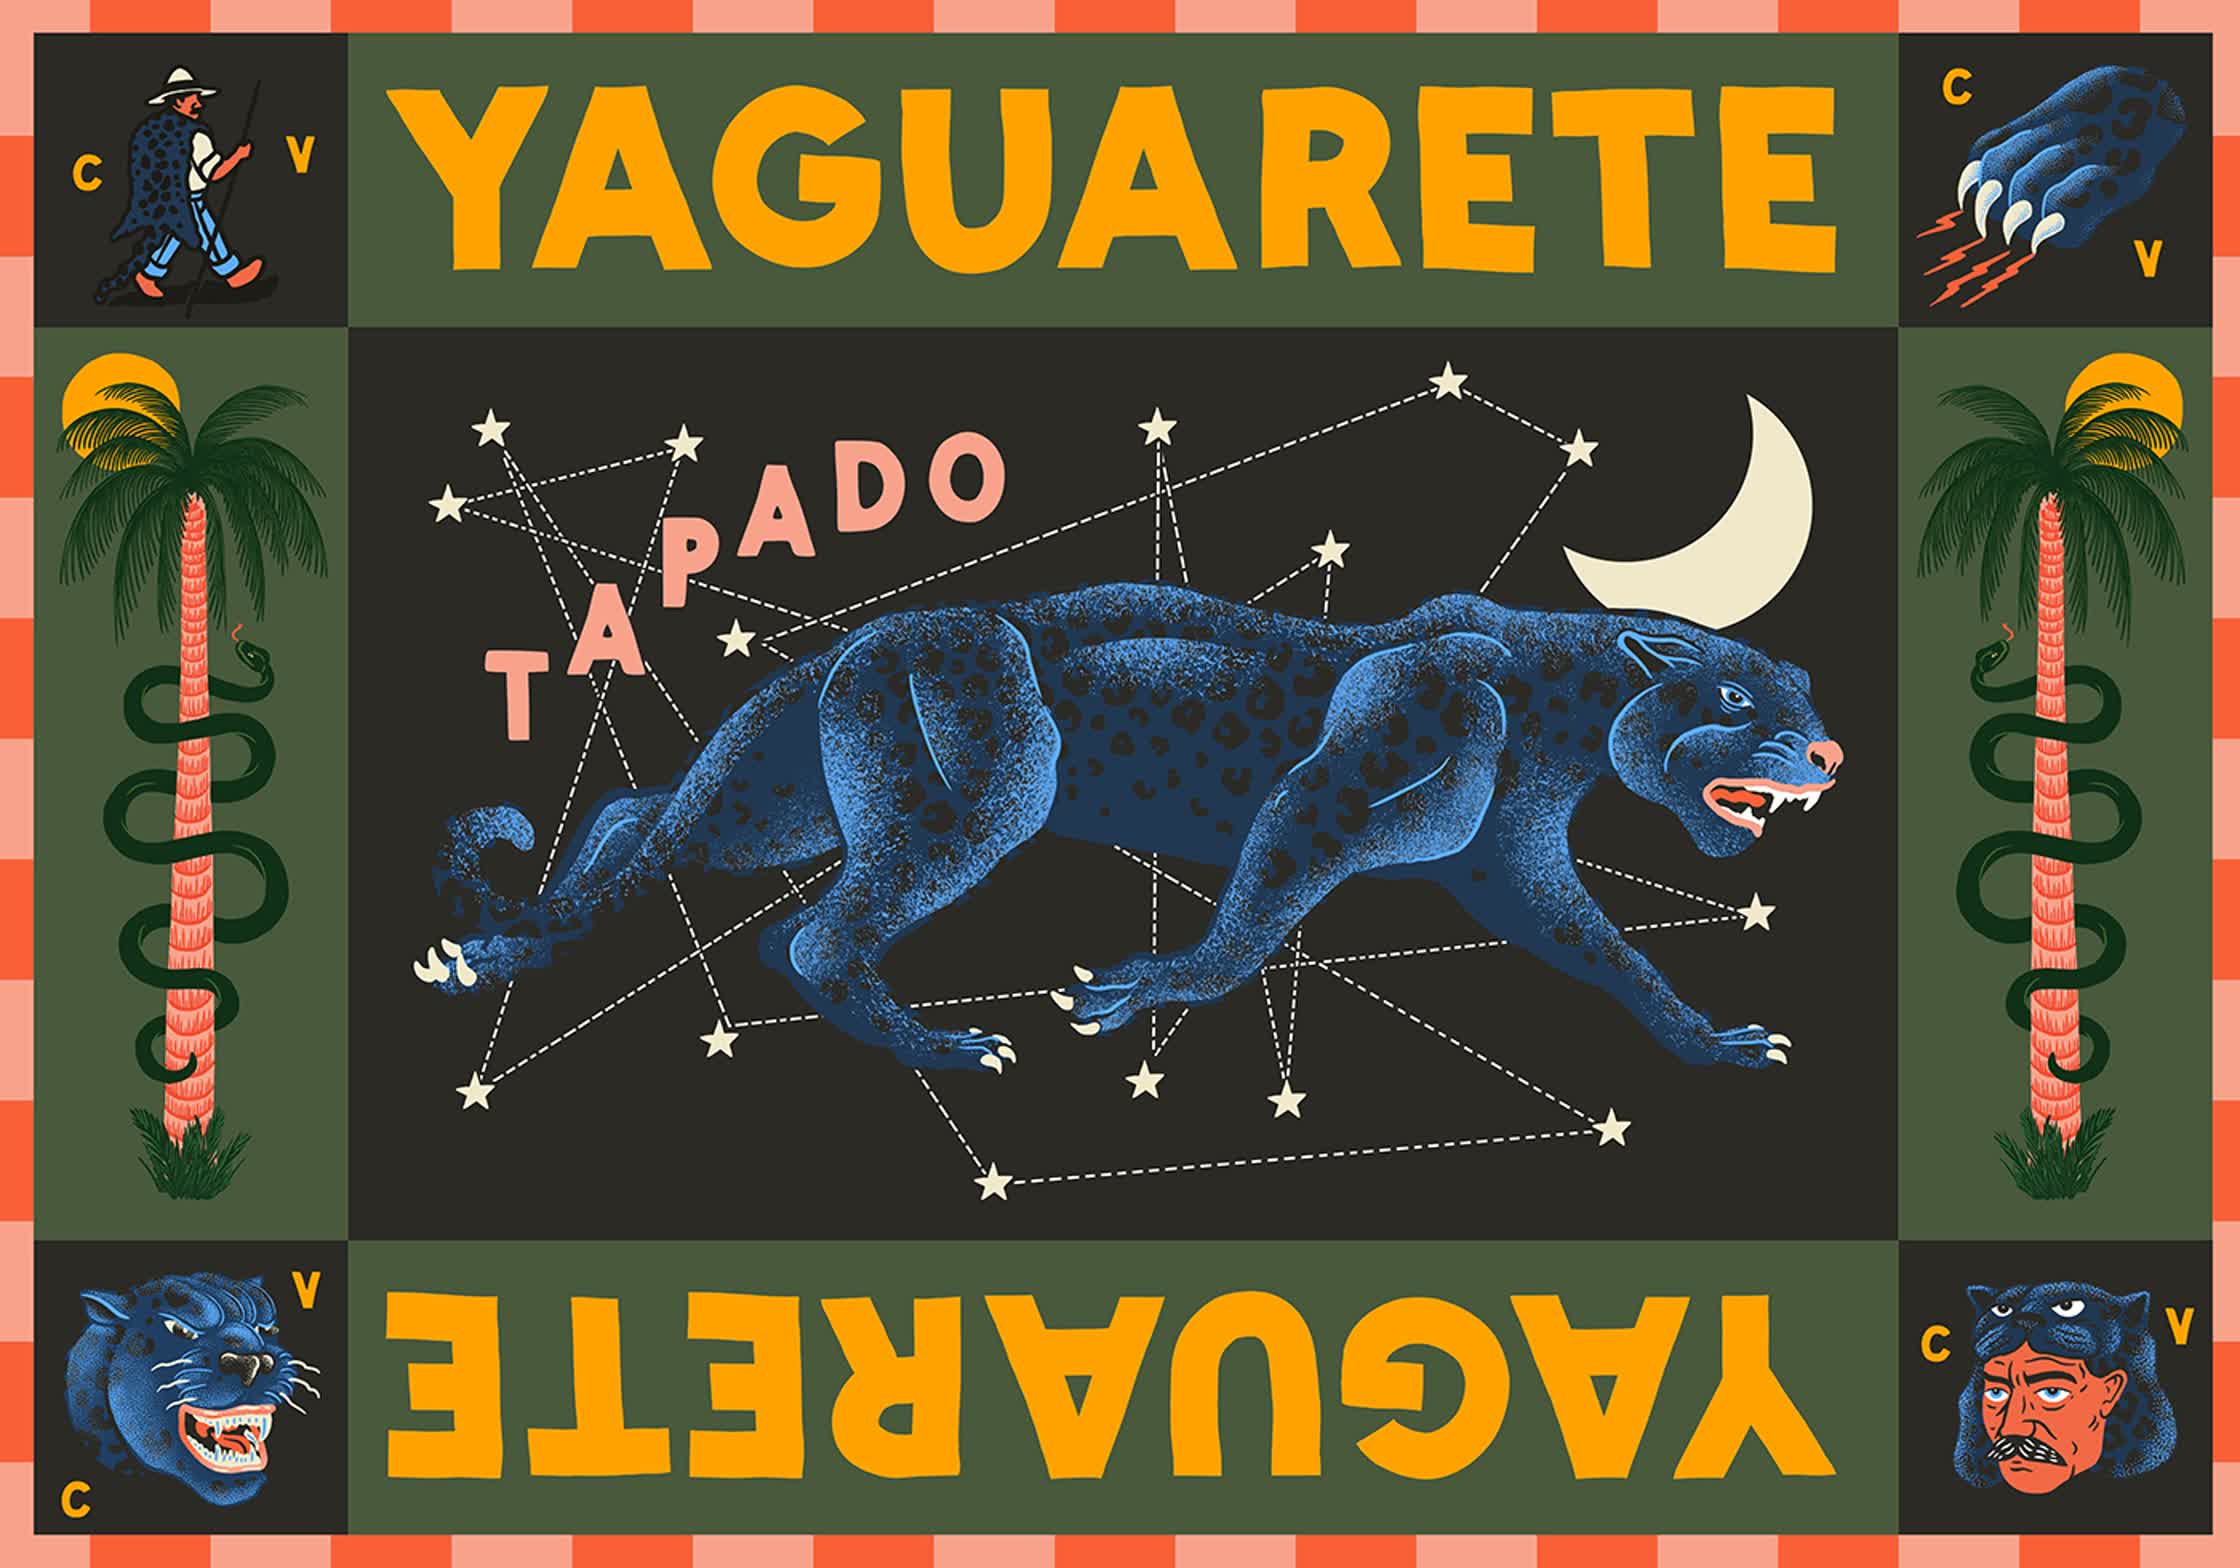 Yaguareté Tapado copy.jpg